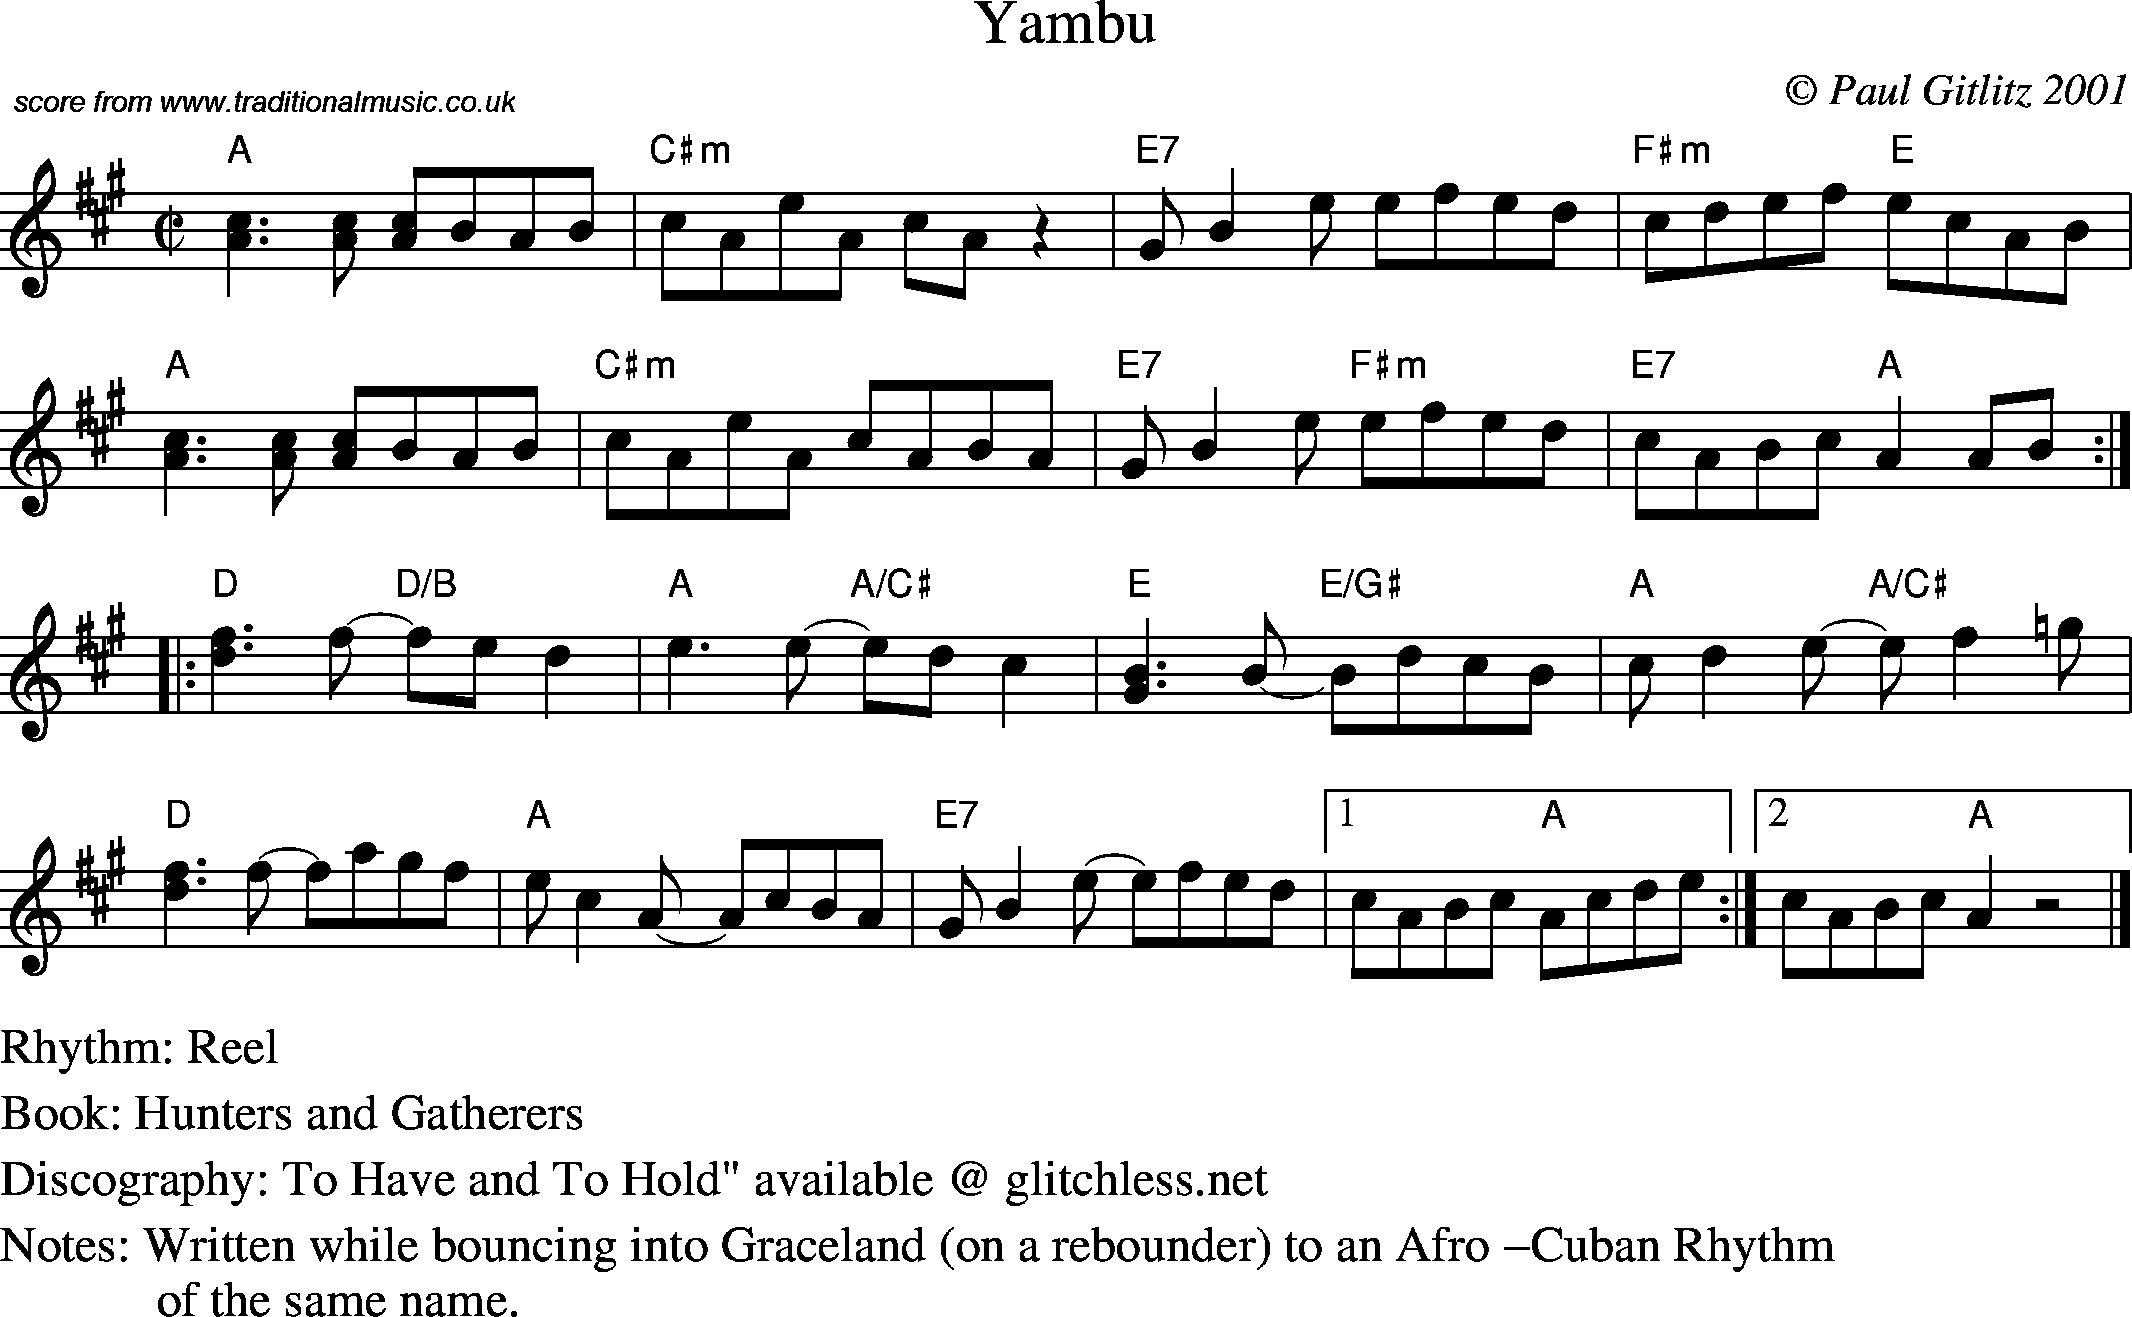 Sheet Music Score for Reel - Yambu